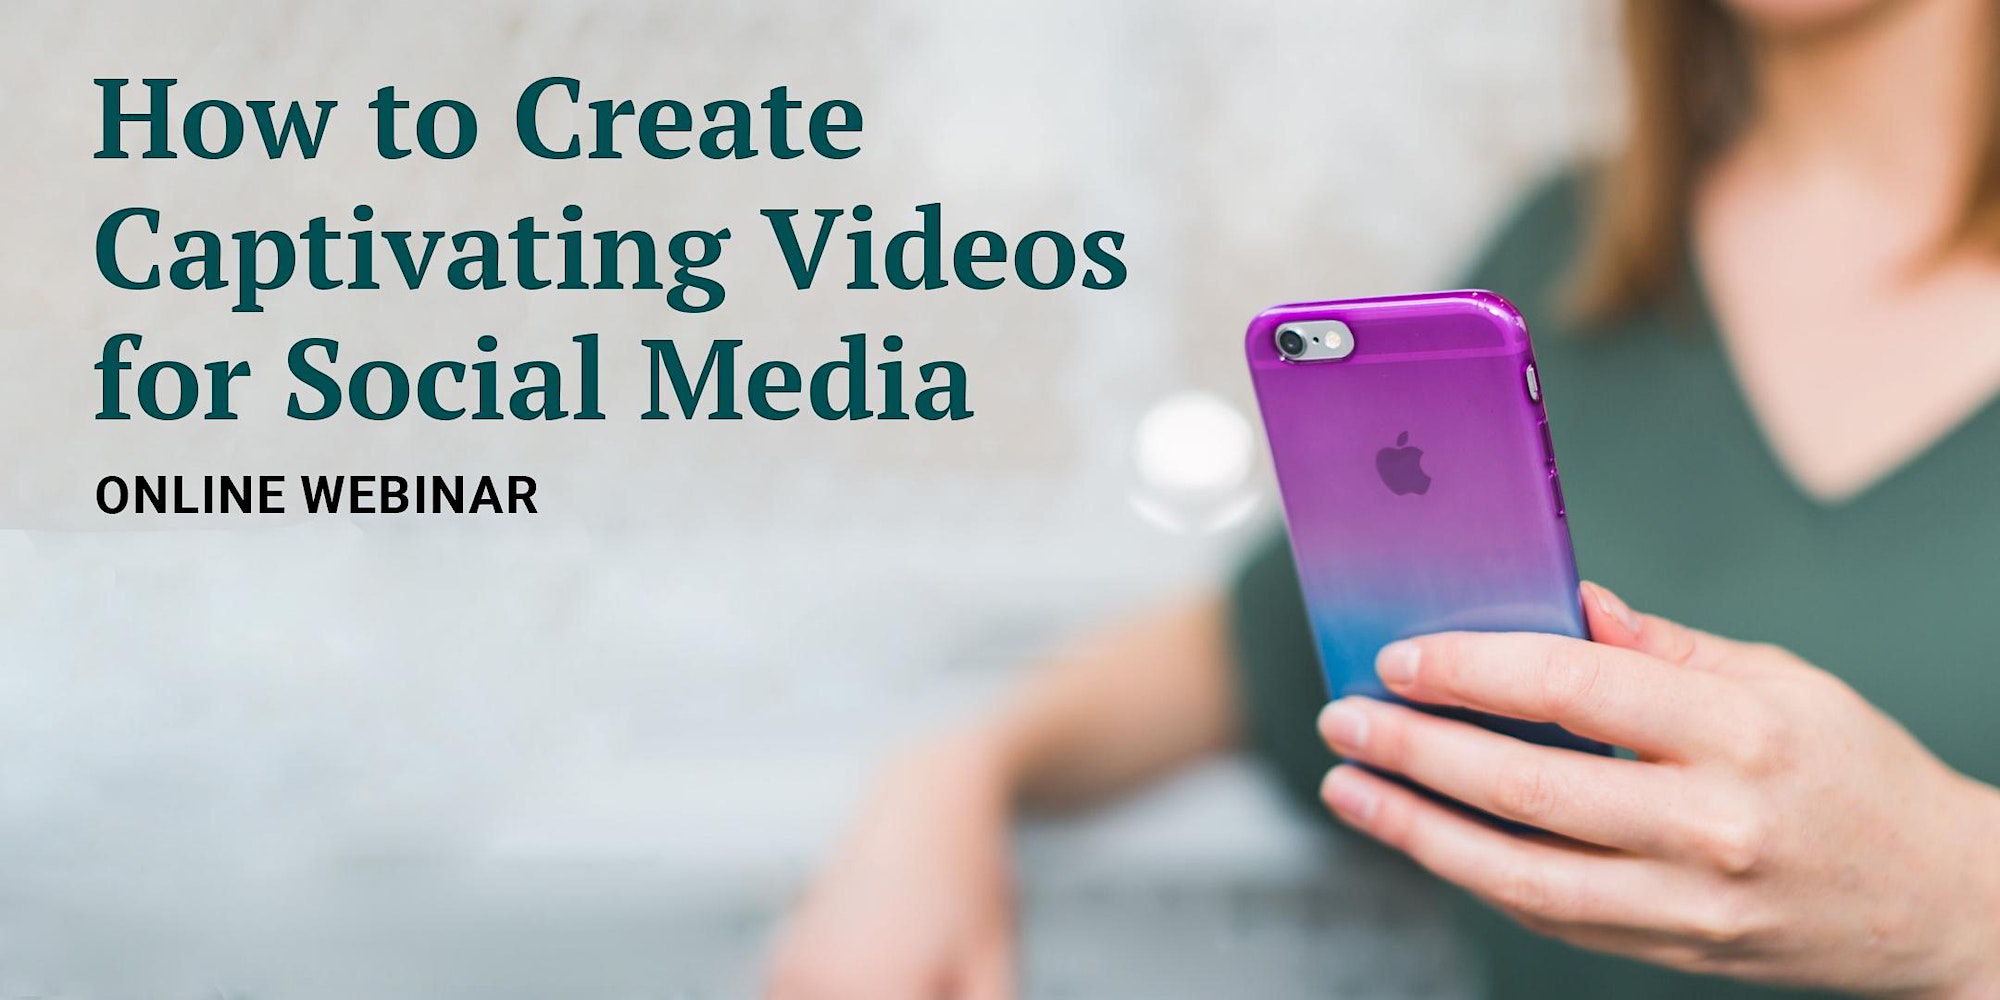 How to create captivating videos for social media online webinar